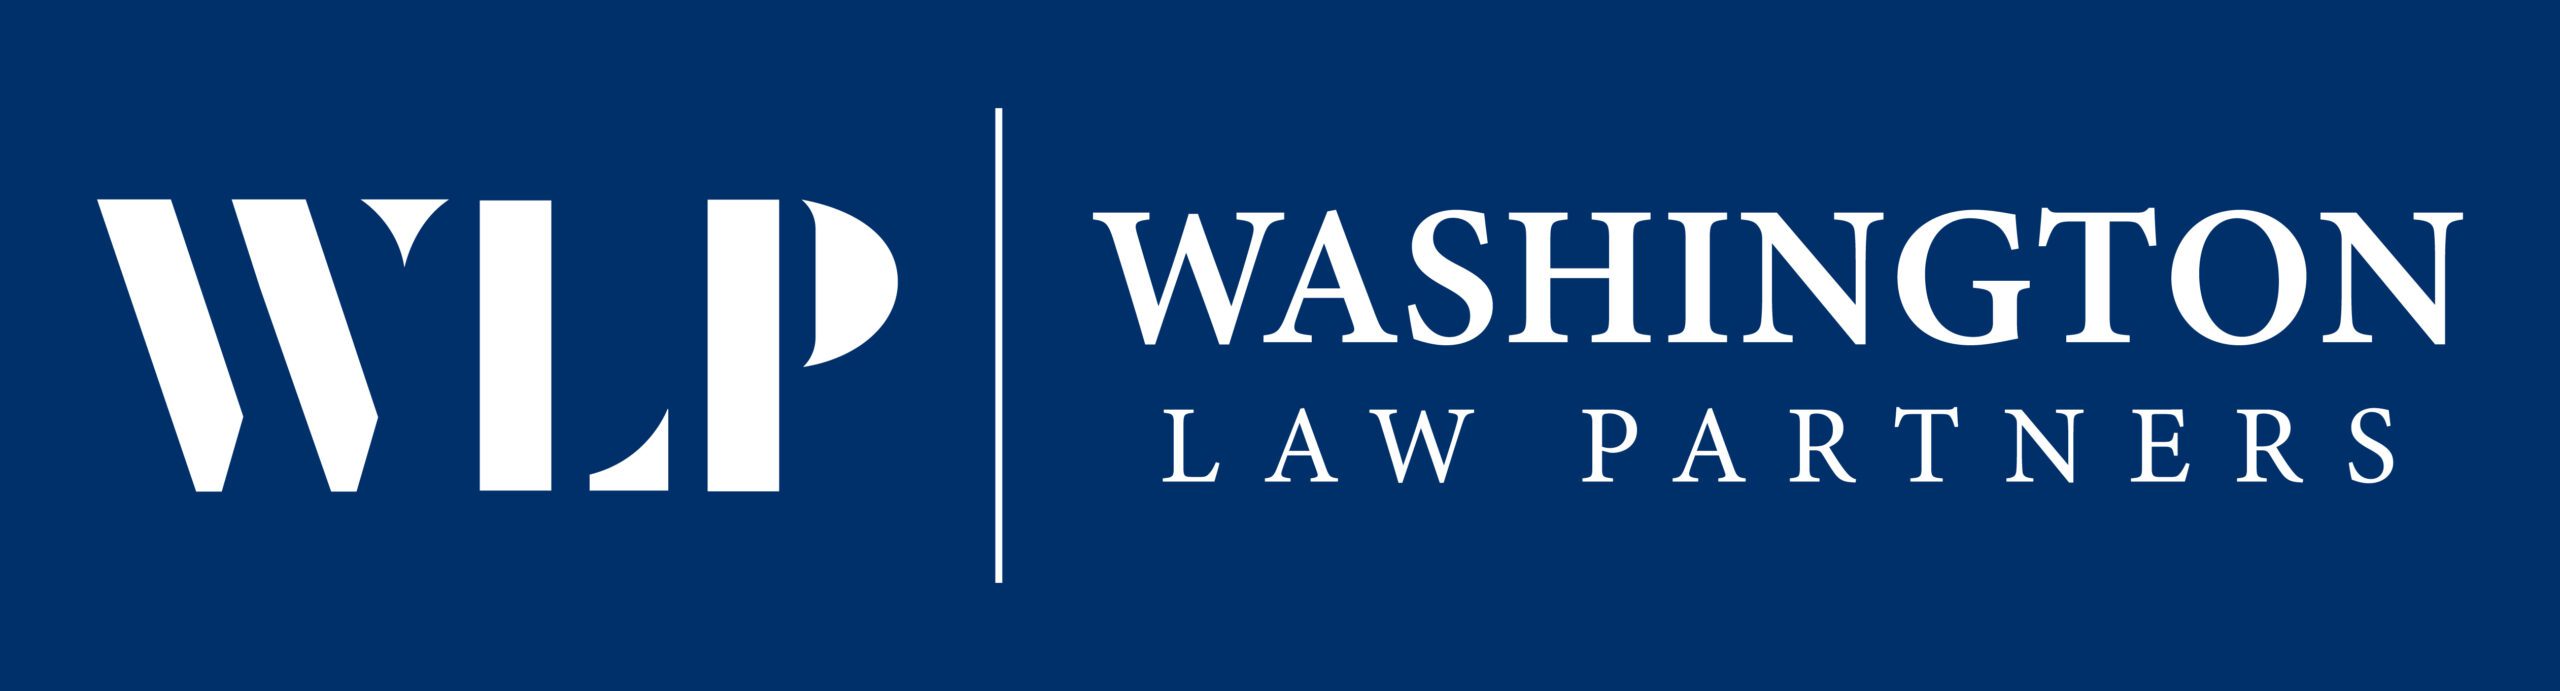 Washington DC Wills & Trusts Lawyer